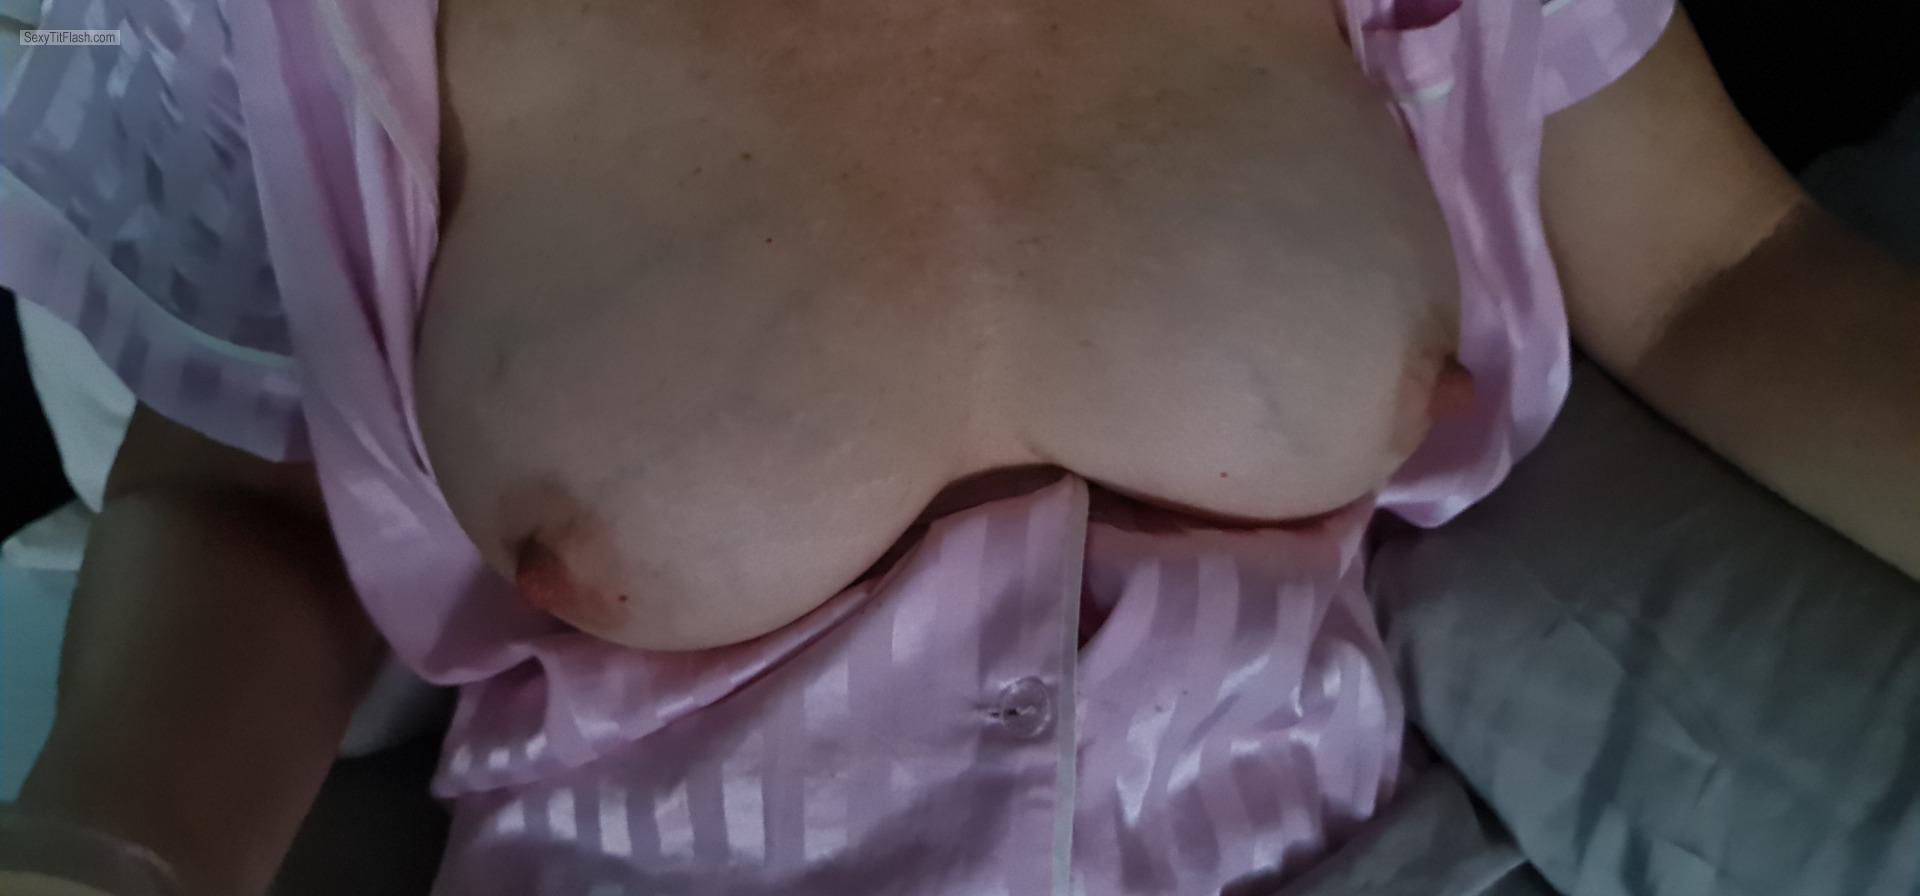 Very big Tits Of My Wife Selfie by Hot Mum